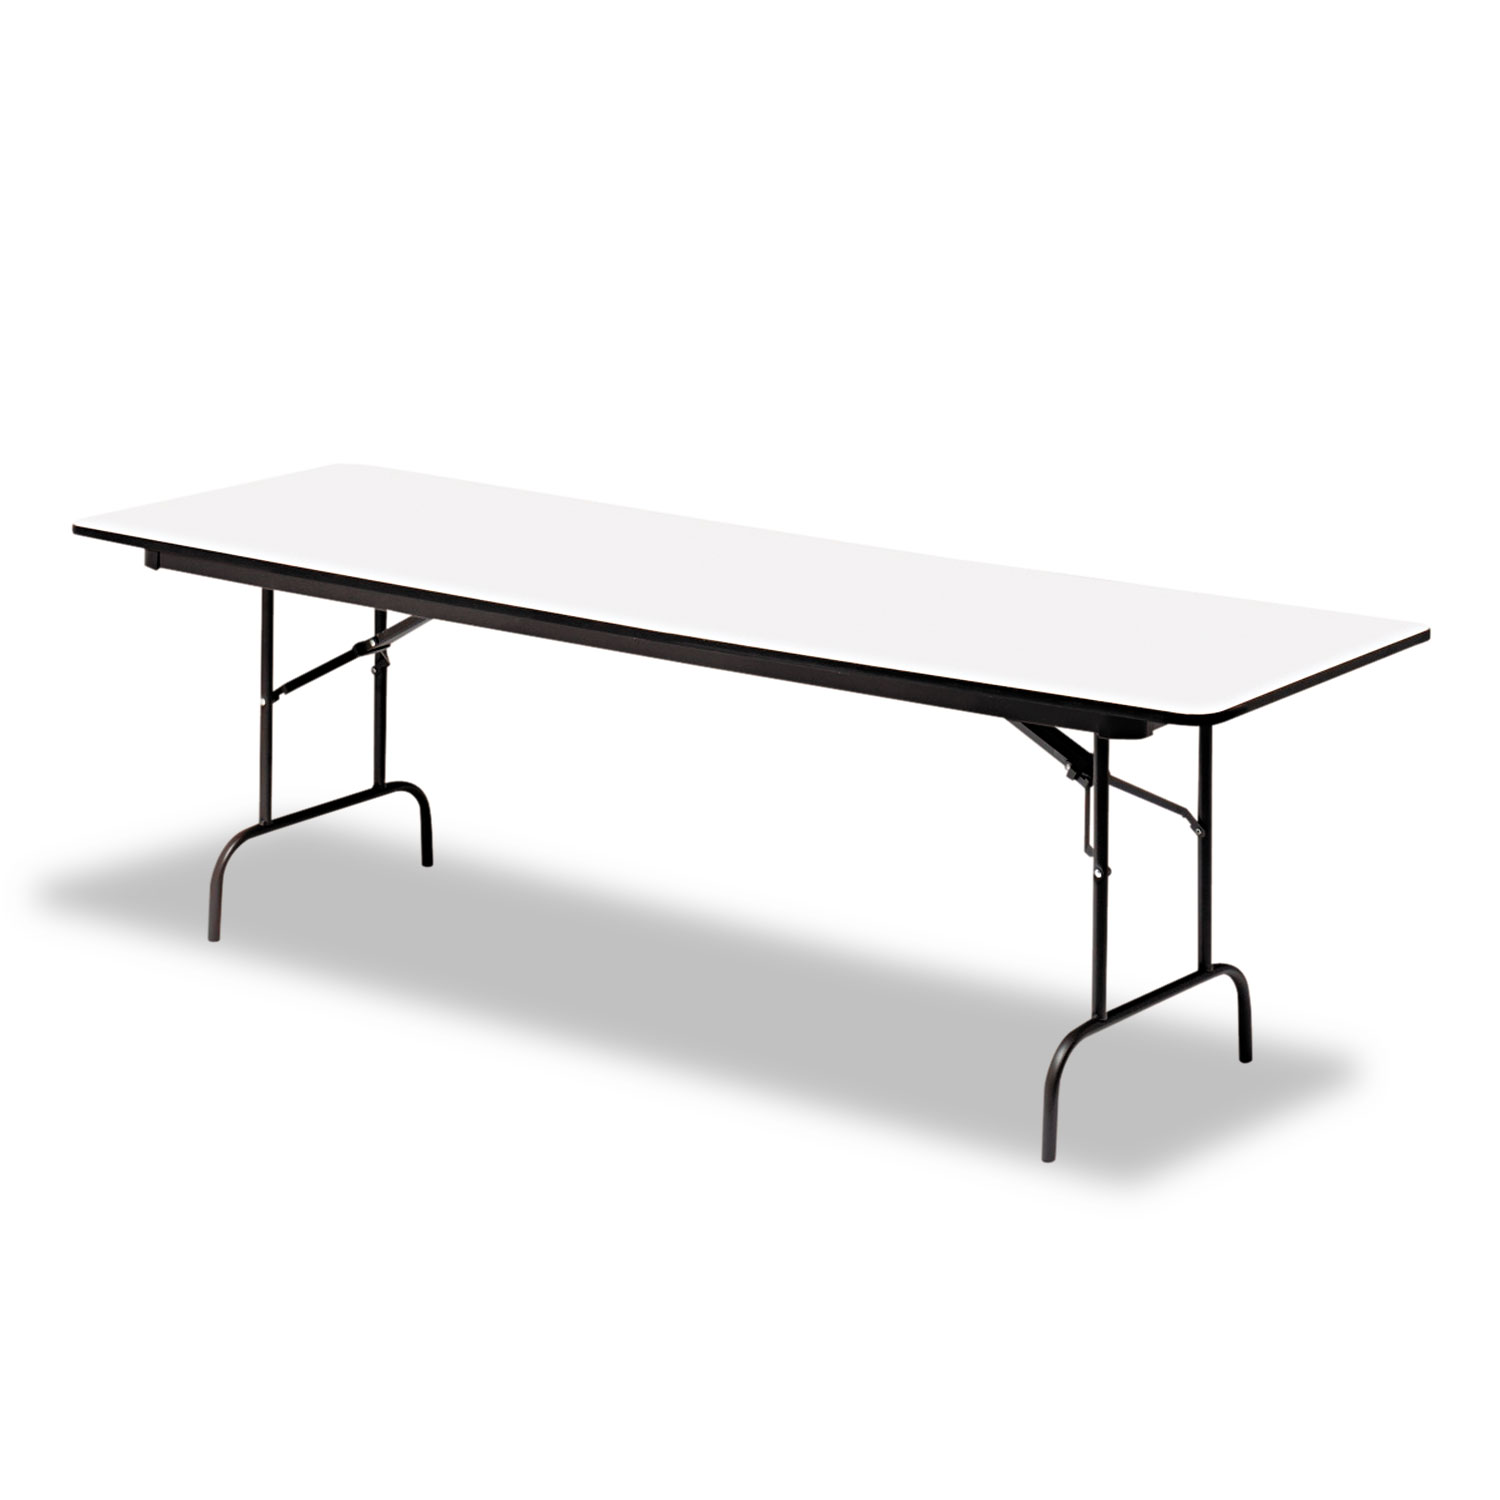  Iceberg 55227 Premium Wood Laminate Folding Table, Rectangular, 72w x 30d x 29h, Gray/Charcoal (ICE55227) 